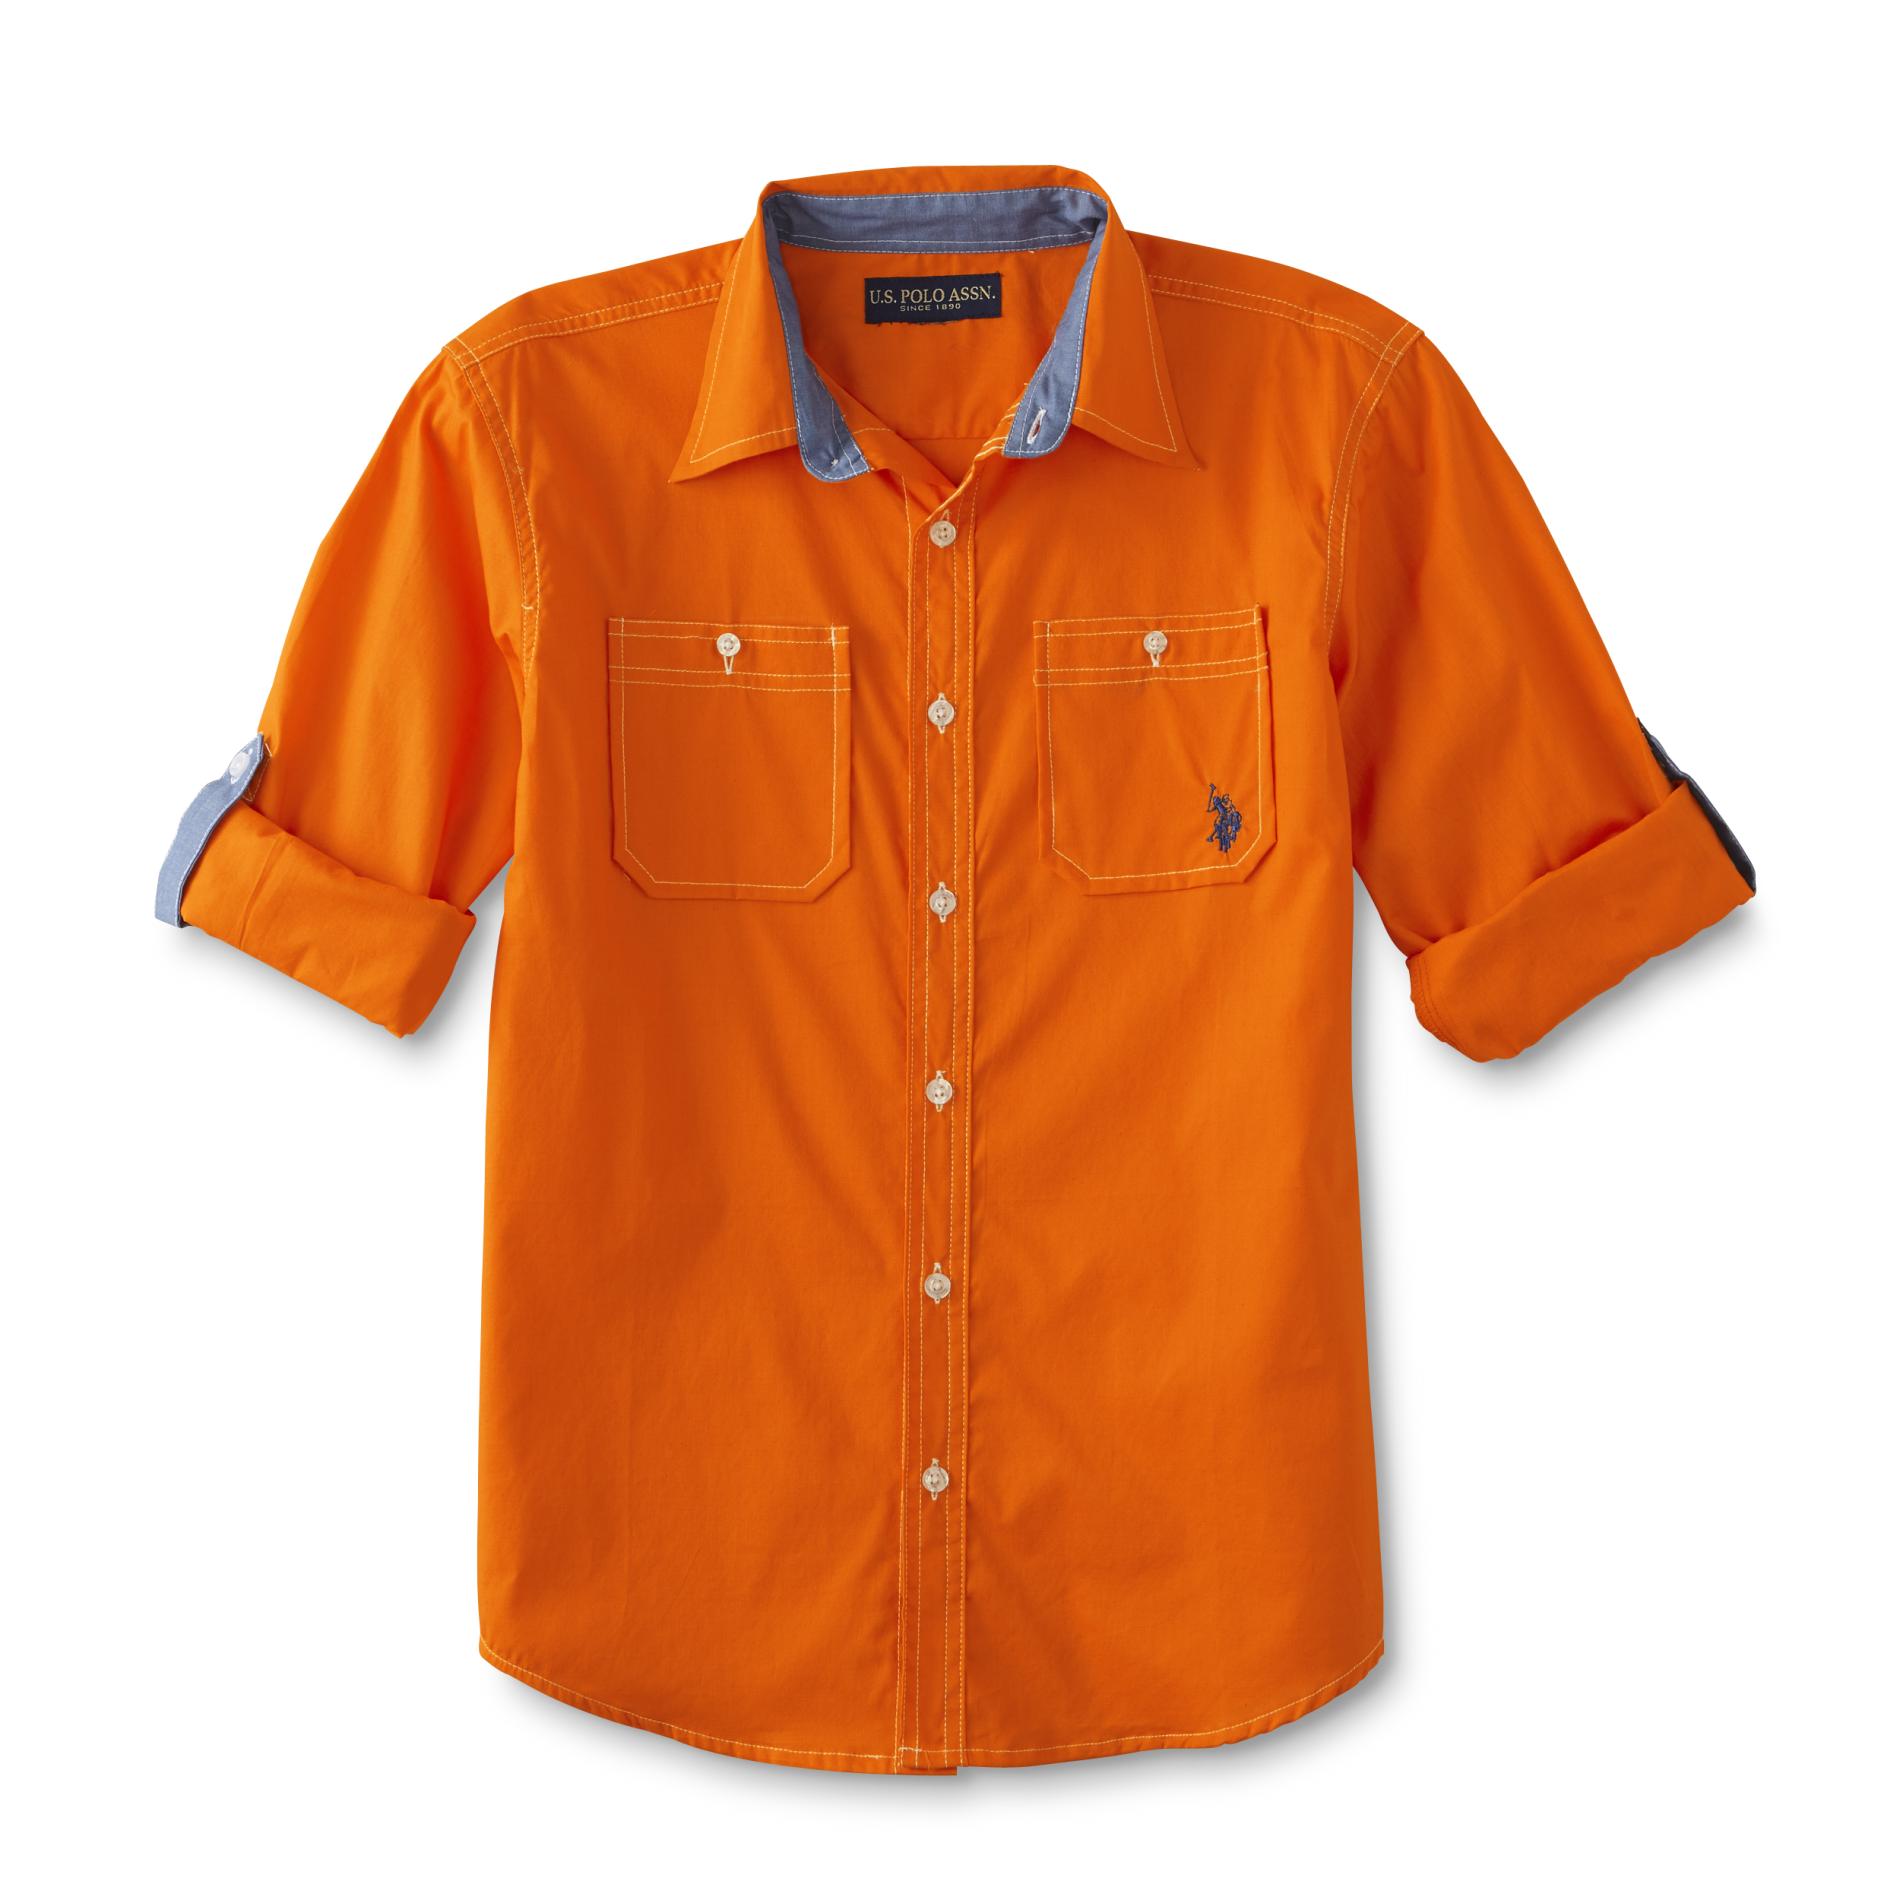 U.S. Polo Assn. Boy's Button-Front Shirt